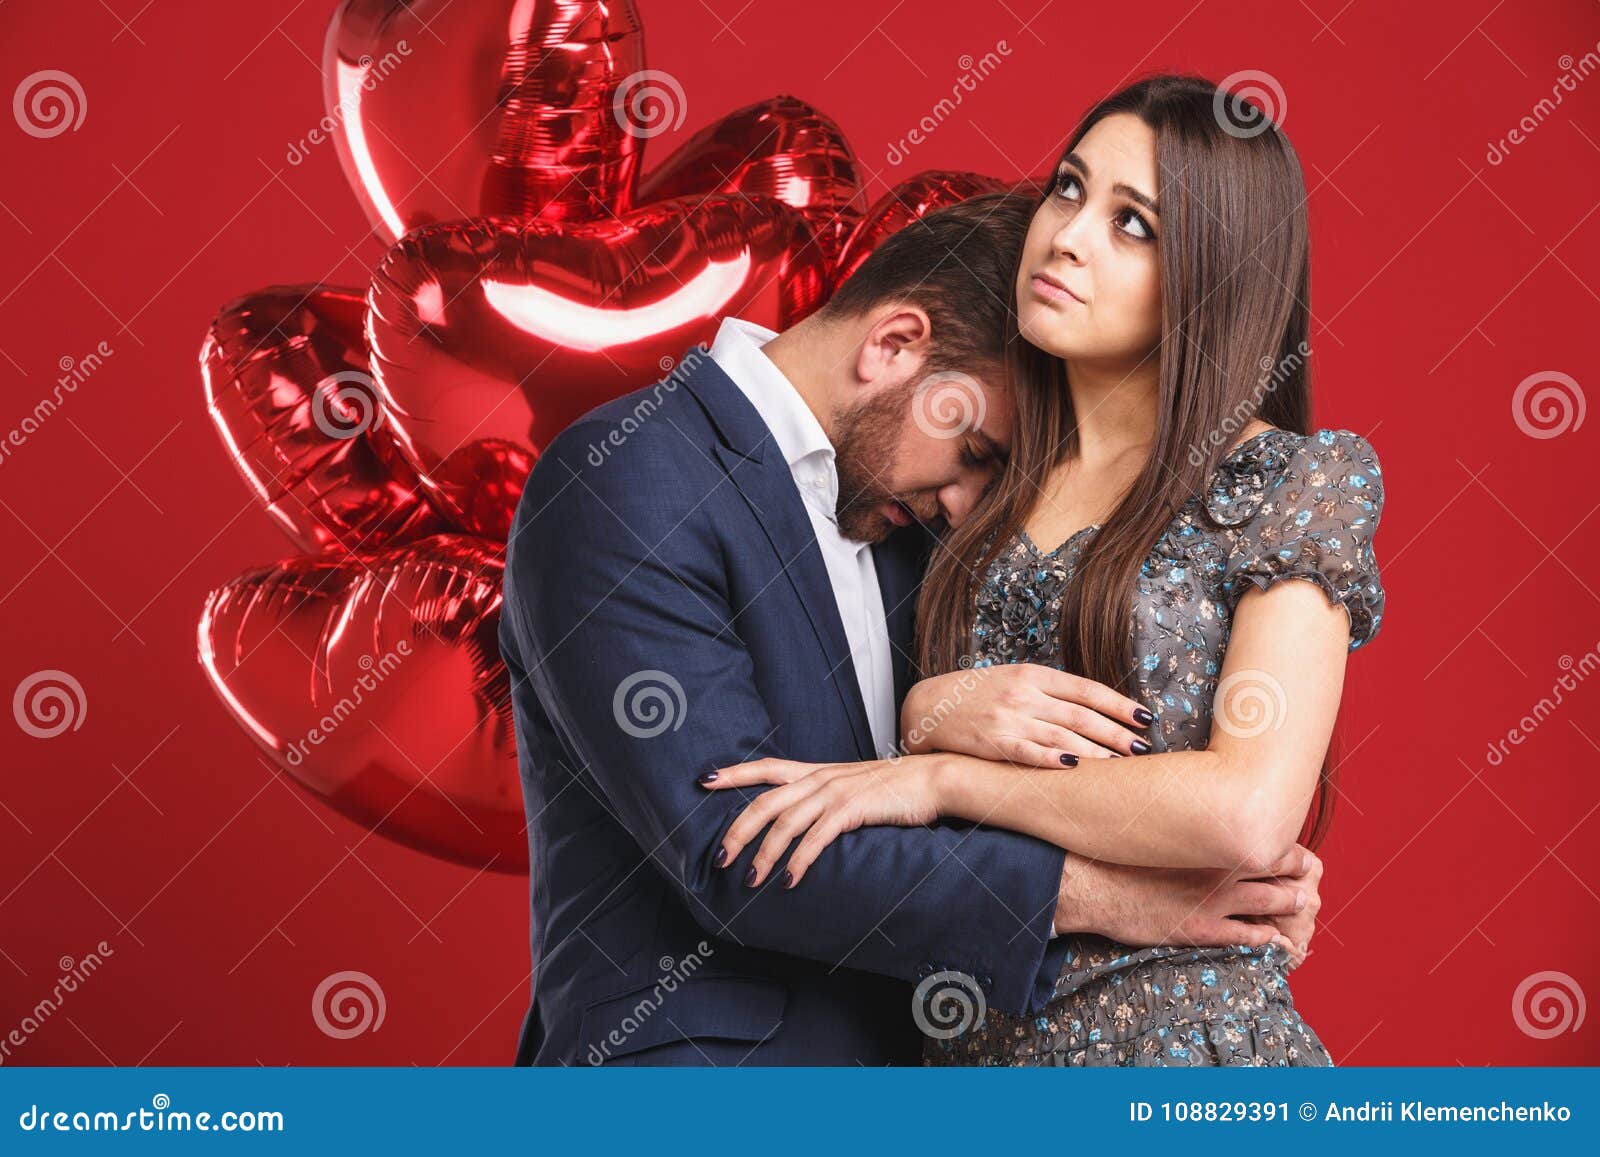 Stunning Sensual Portrait Of Young Sad Couple Stock Image Image Of